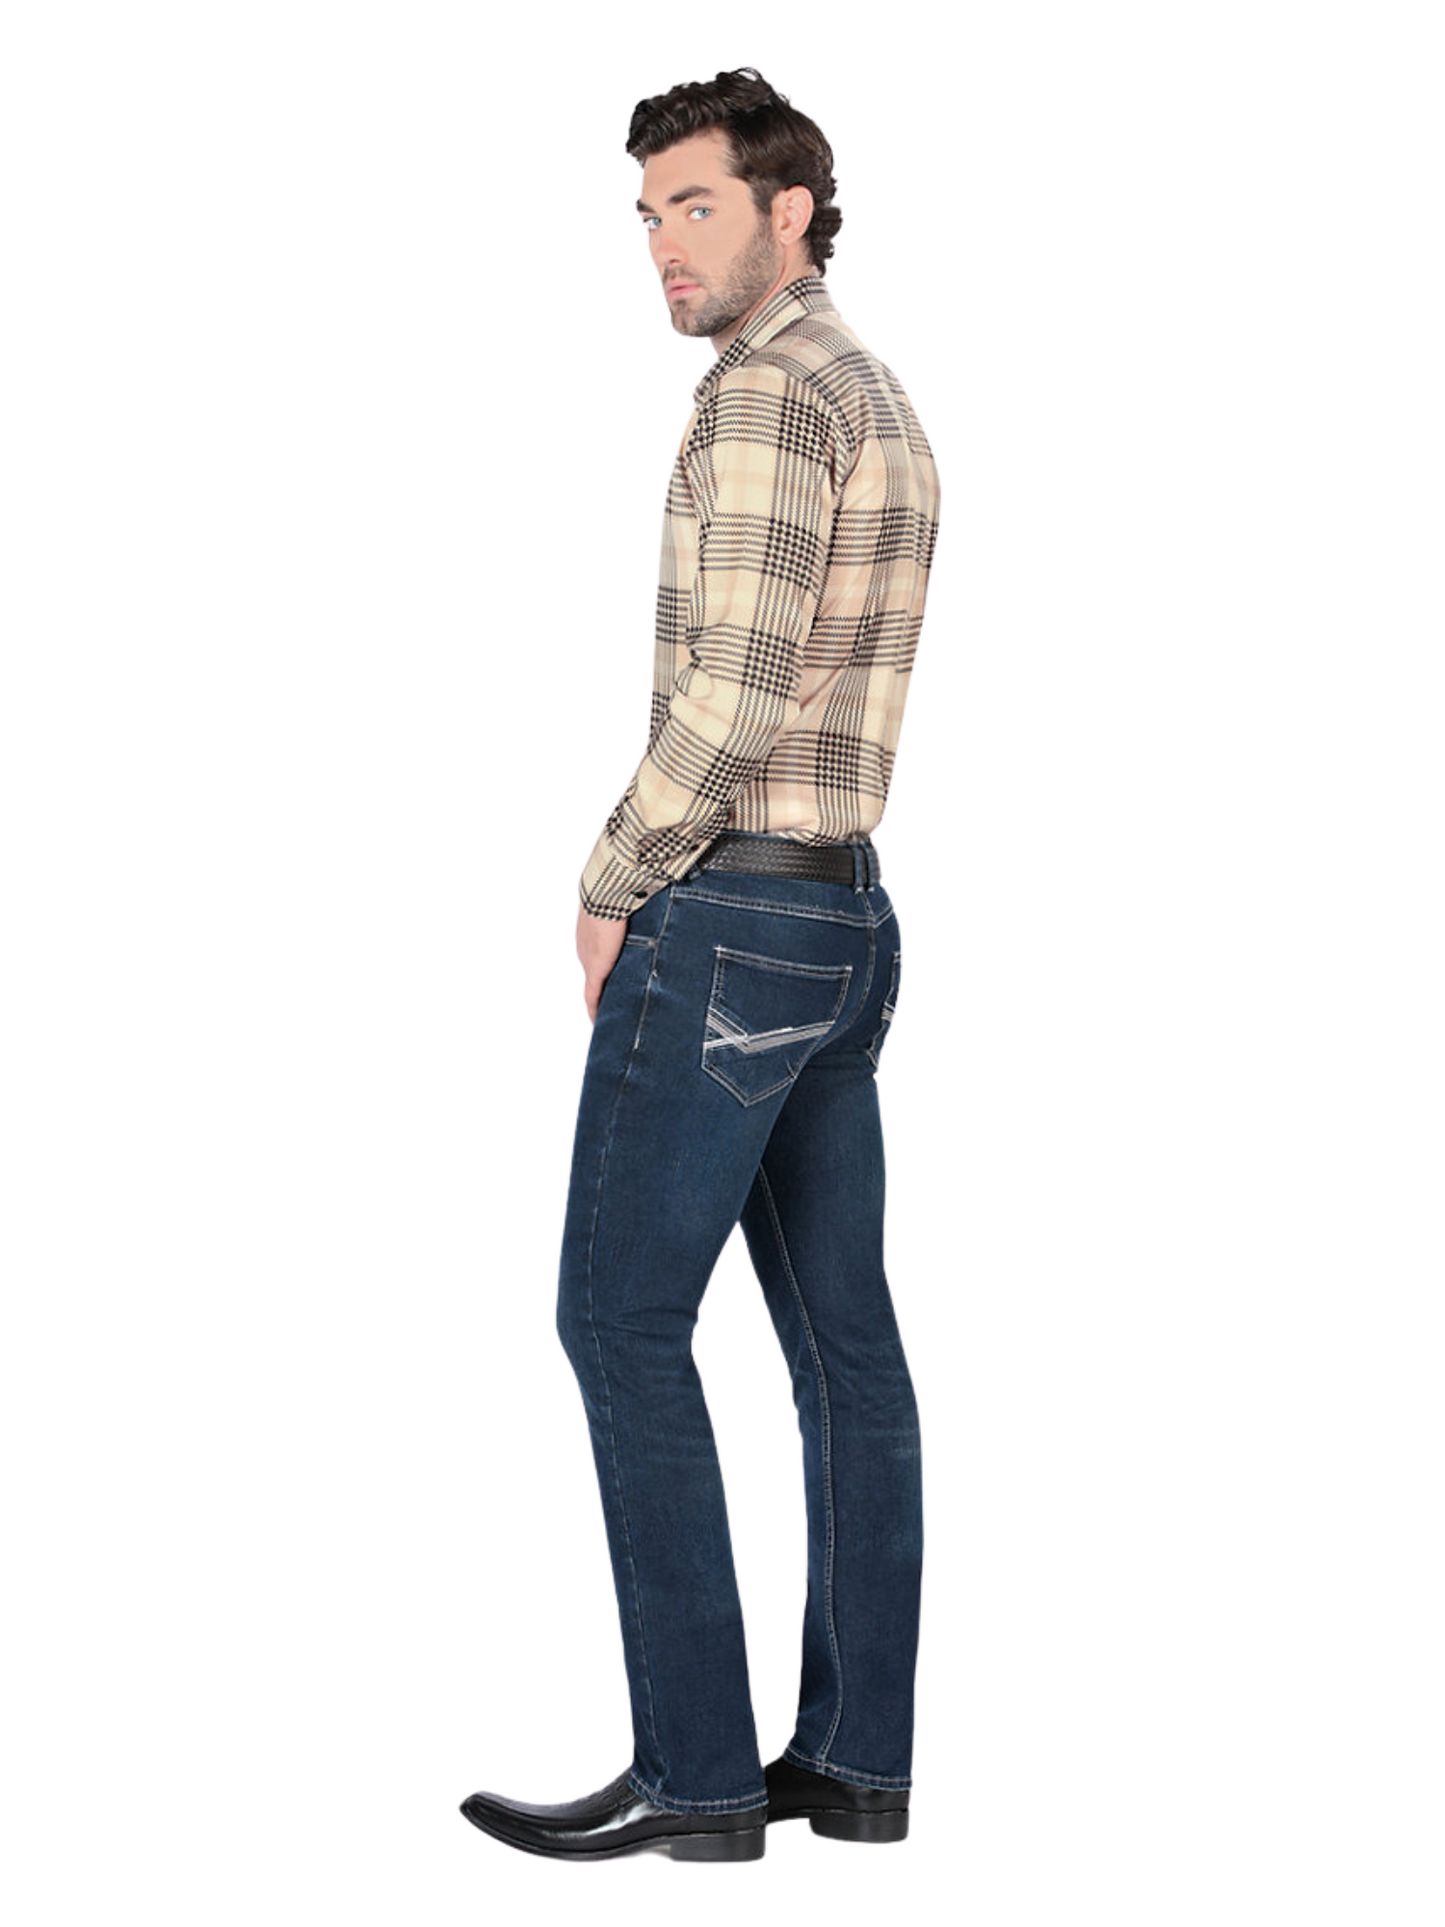 Stretch Denim Jeans for Men 'Montero' - ID: 5312 Denim Jeans Montero